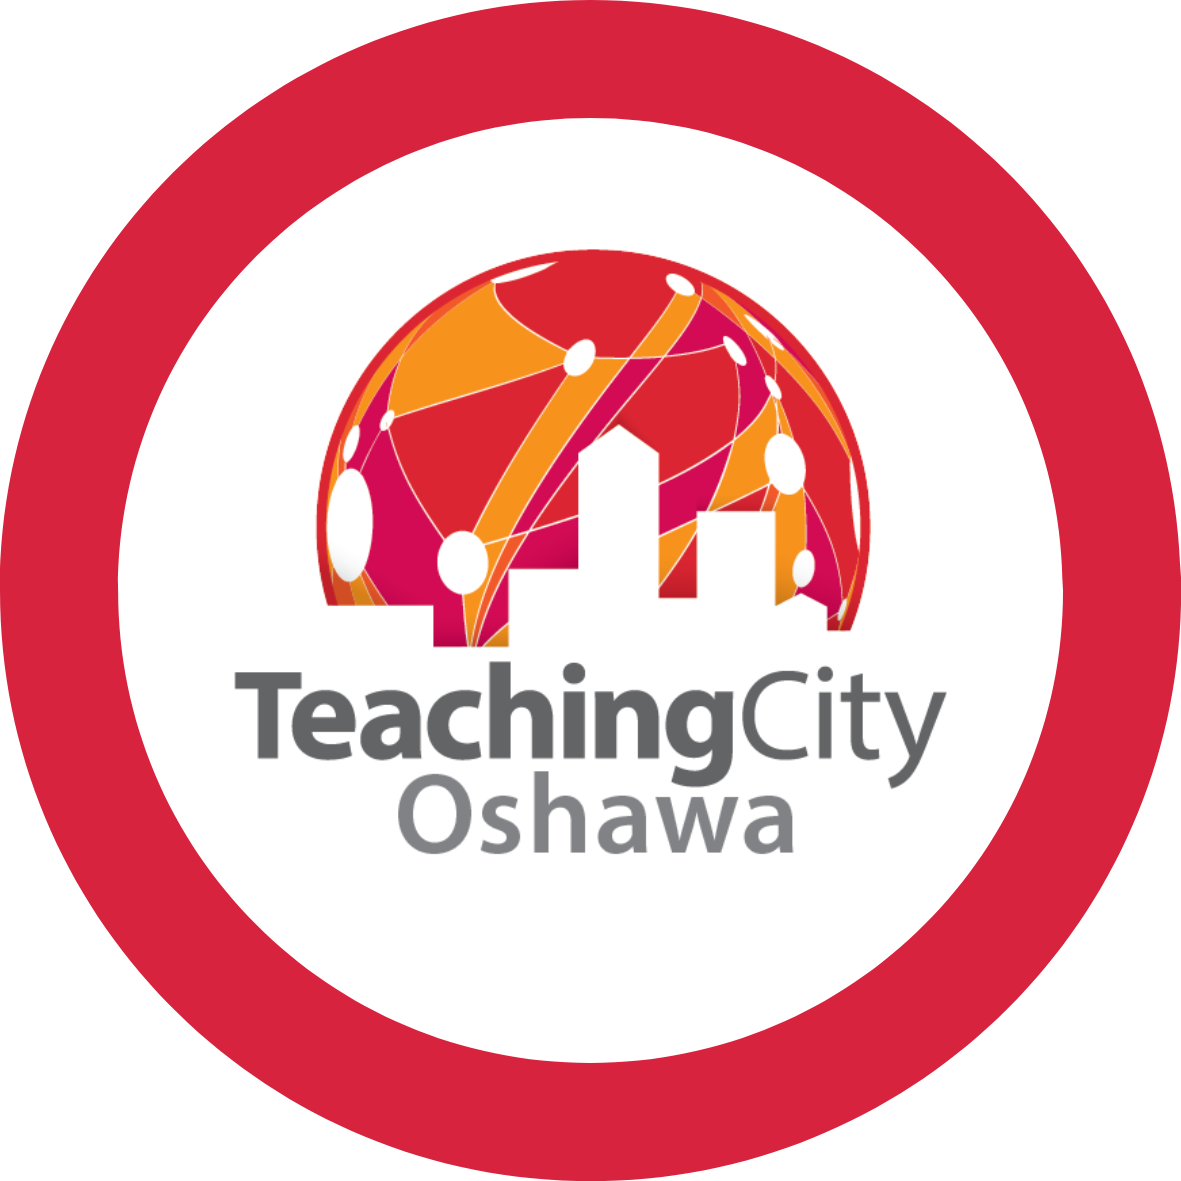 TeachingCity logo